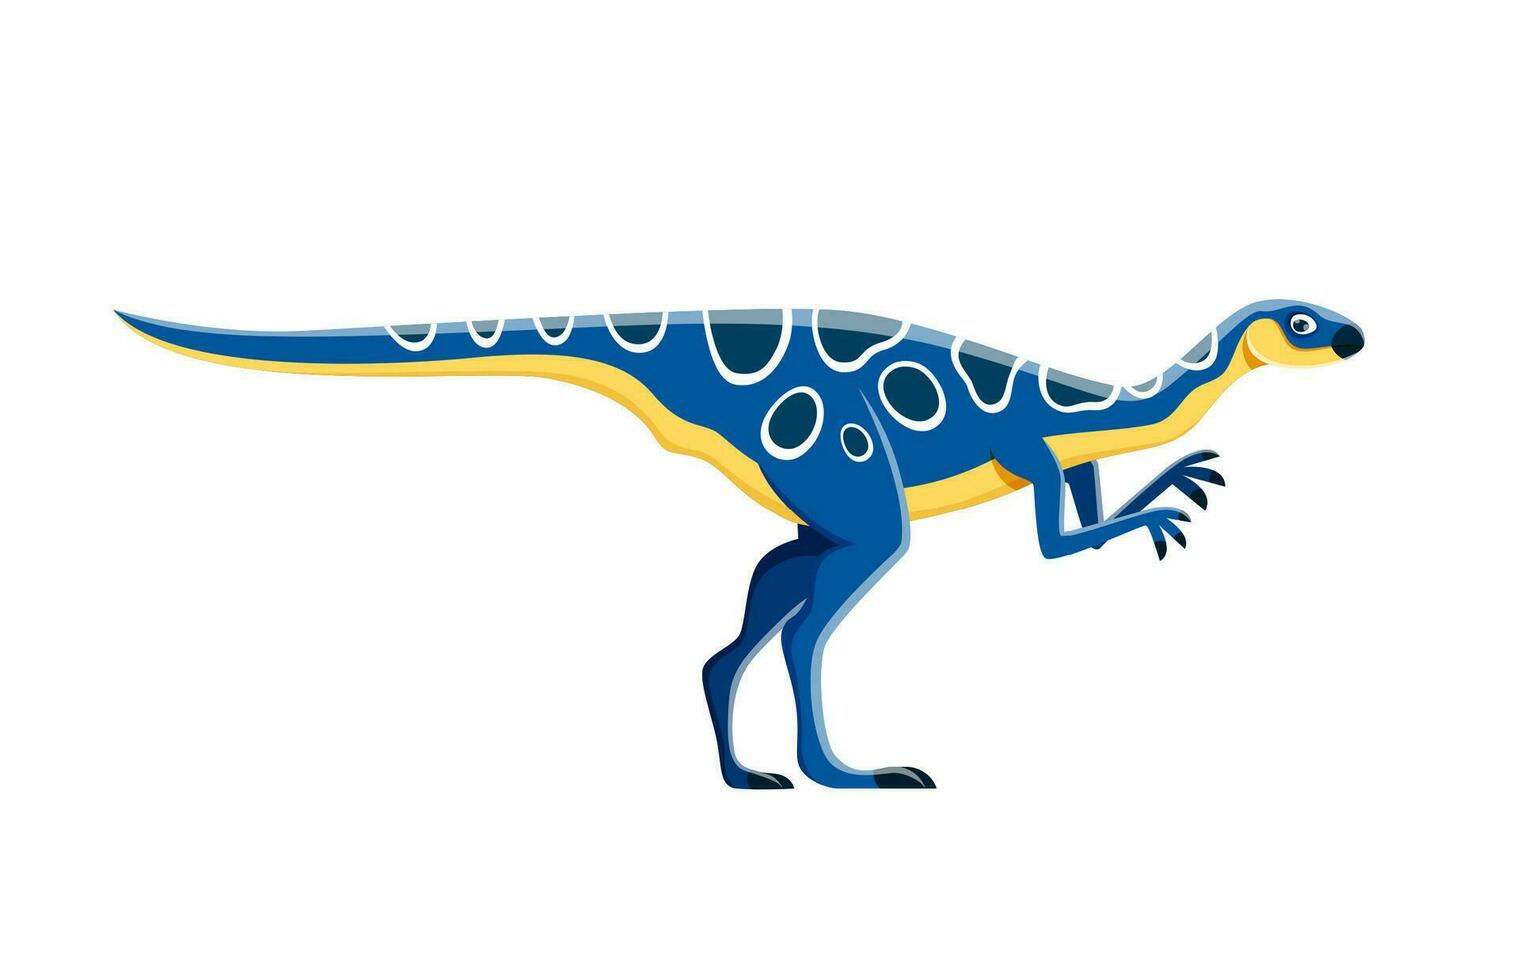 Cartoon Hypsilophodon dinosaur character or dino vector